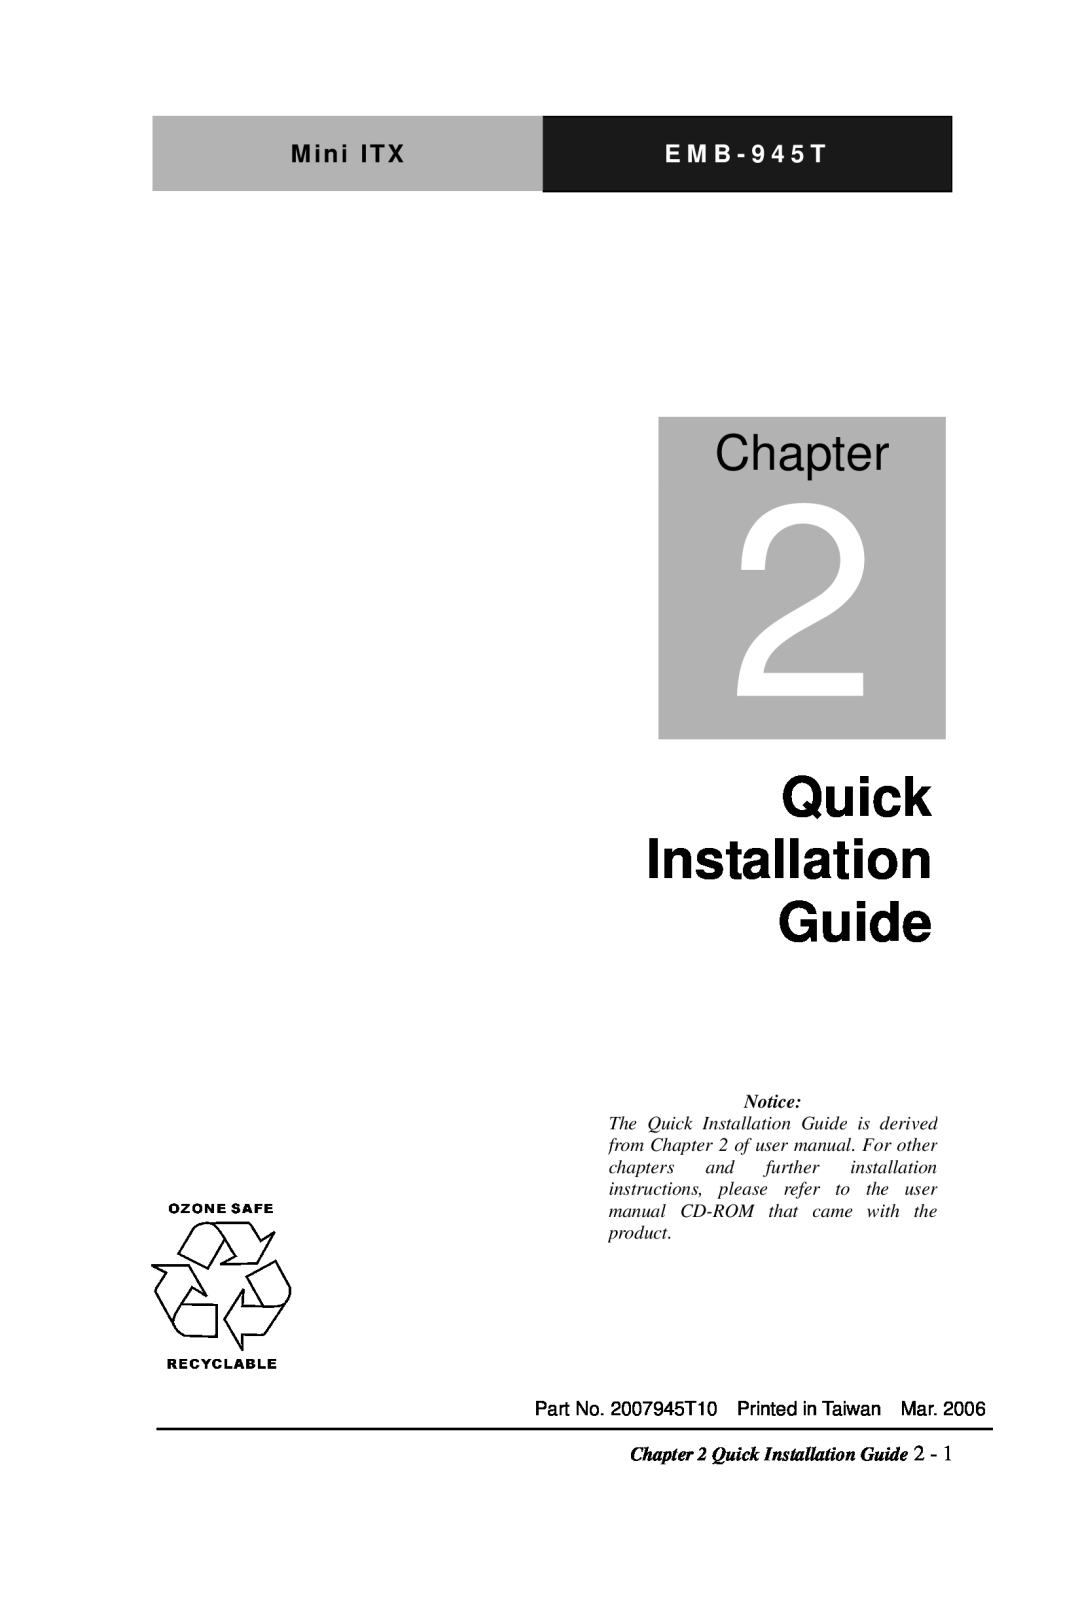 Intel EMB-945T manual Quick Installation Guide, Chapter, Mini ITX, E M B - 9 4 5 T 